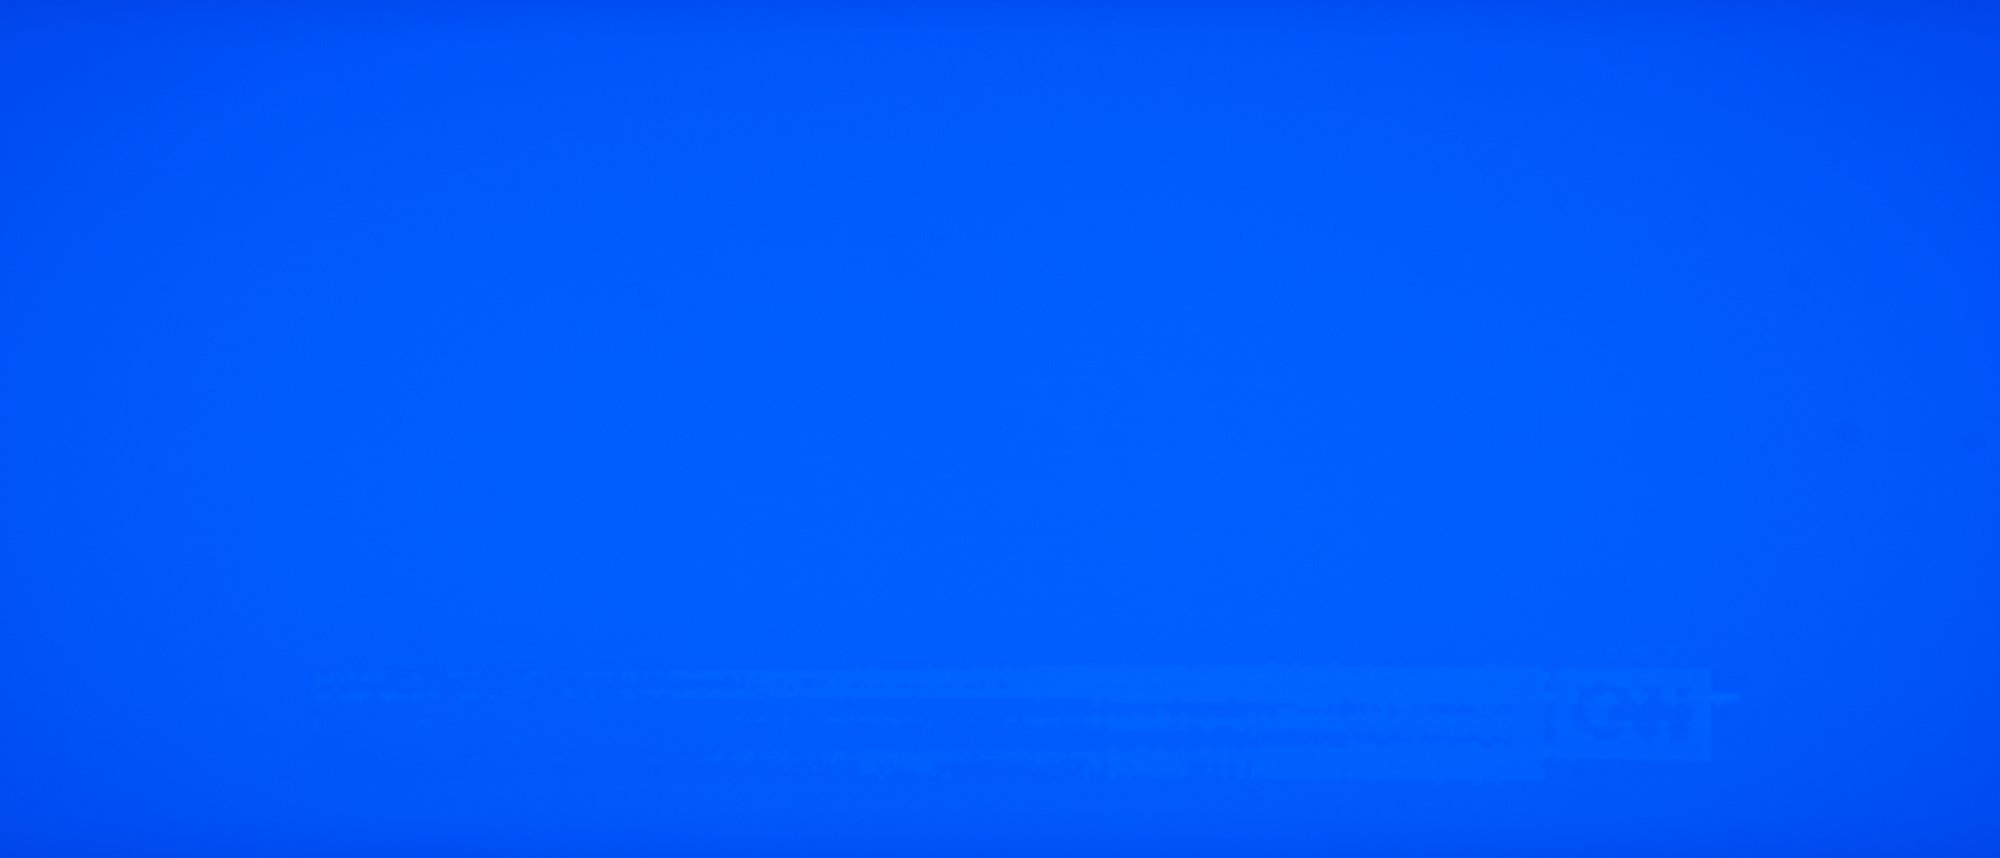 blue-04-large.jpg